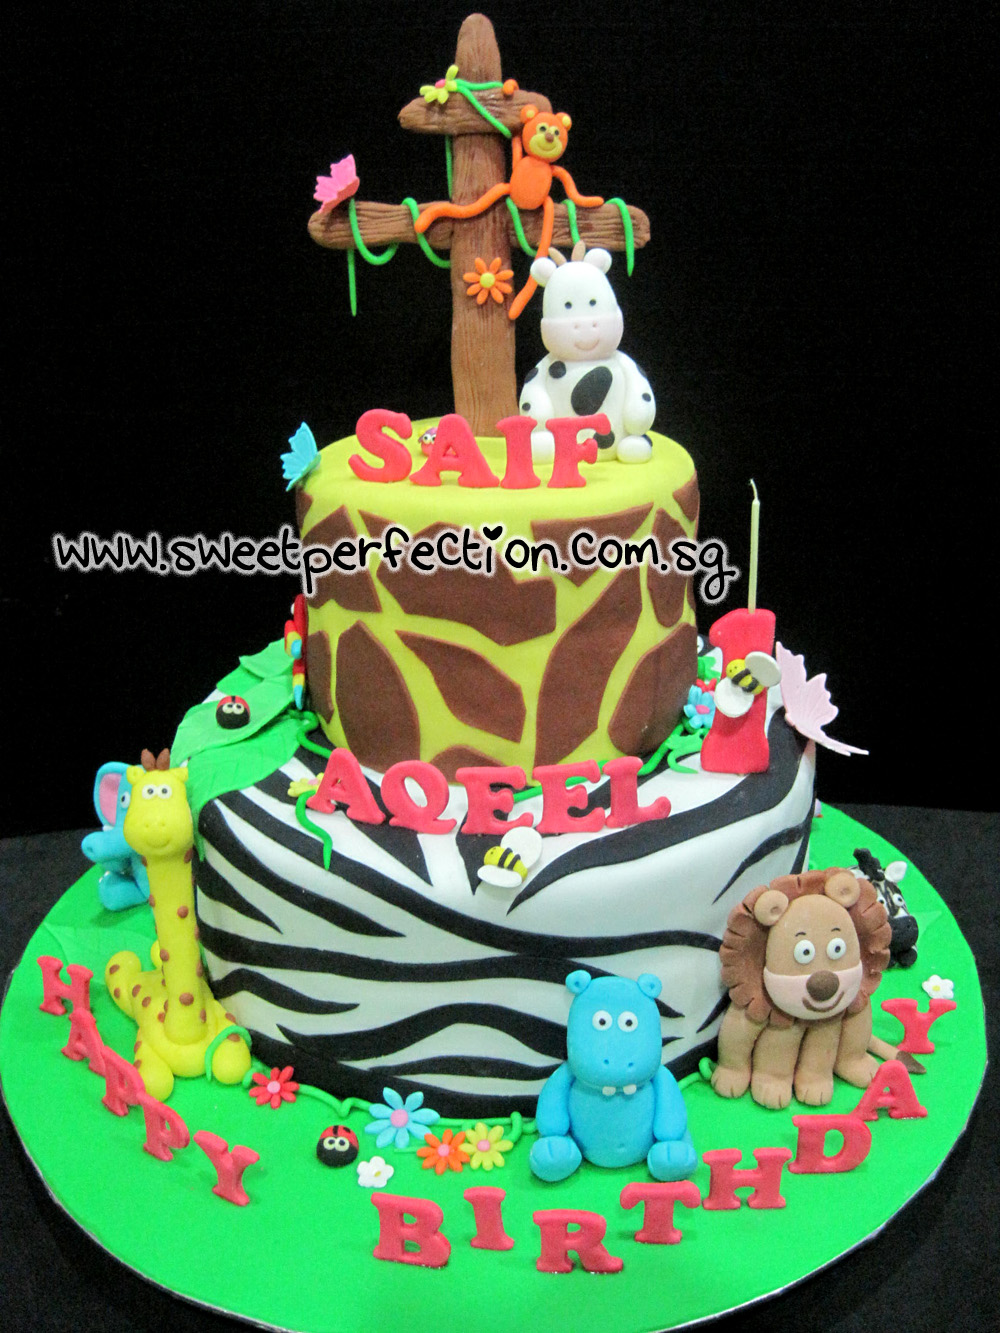 Sweet Perfection Cakes Gallery: Code A24 - 3D Handmold Safari Theme ...